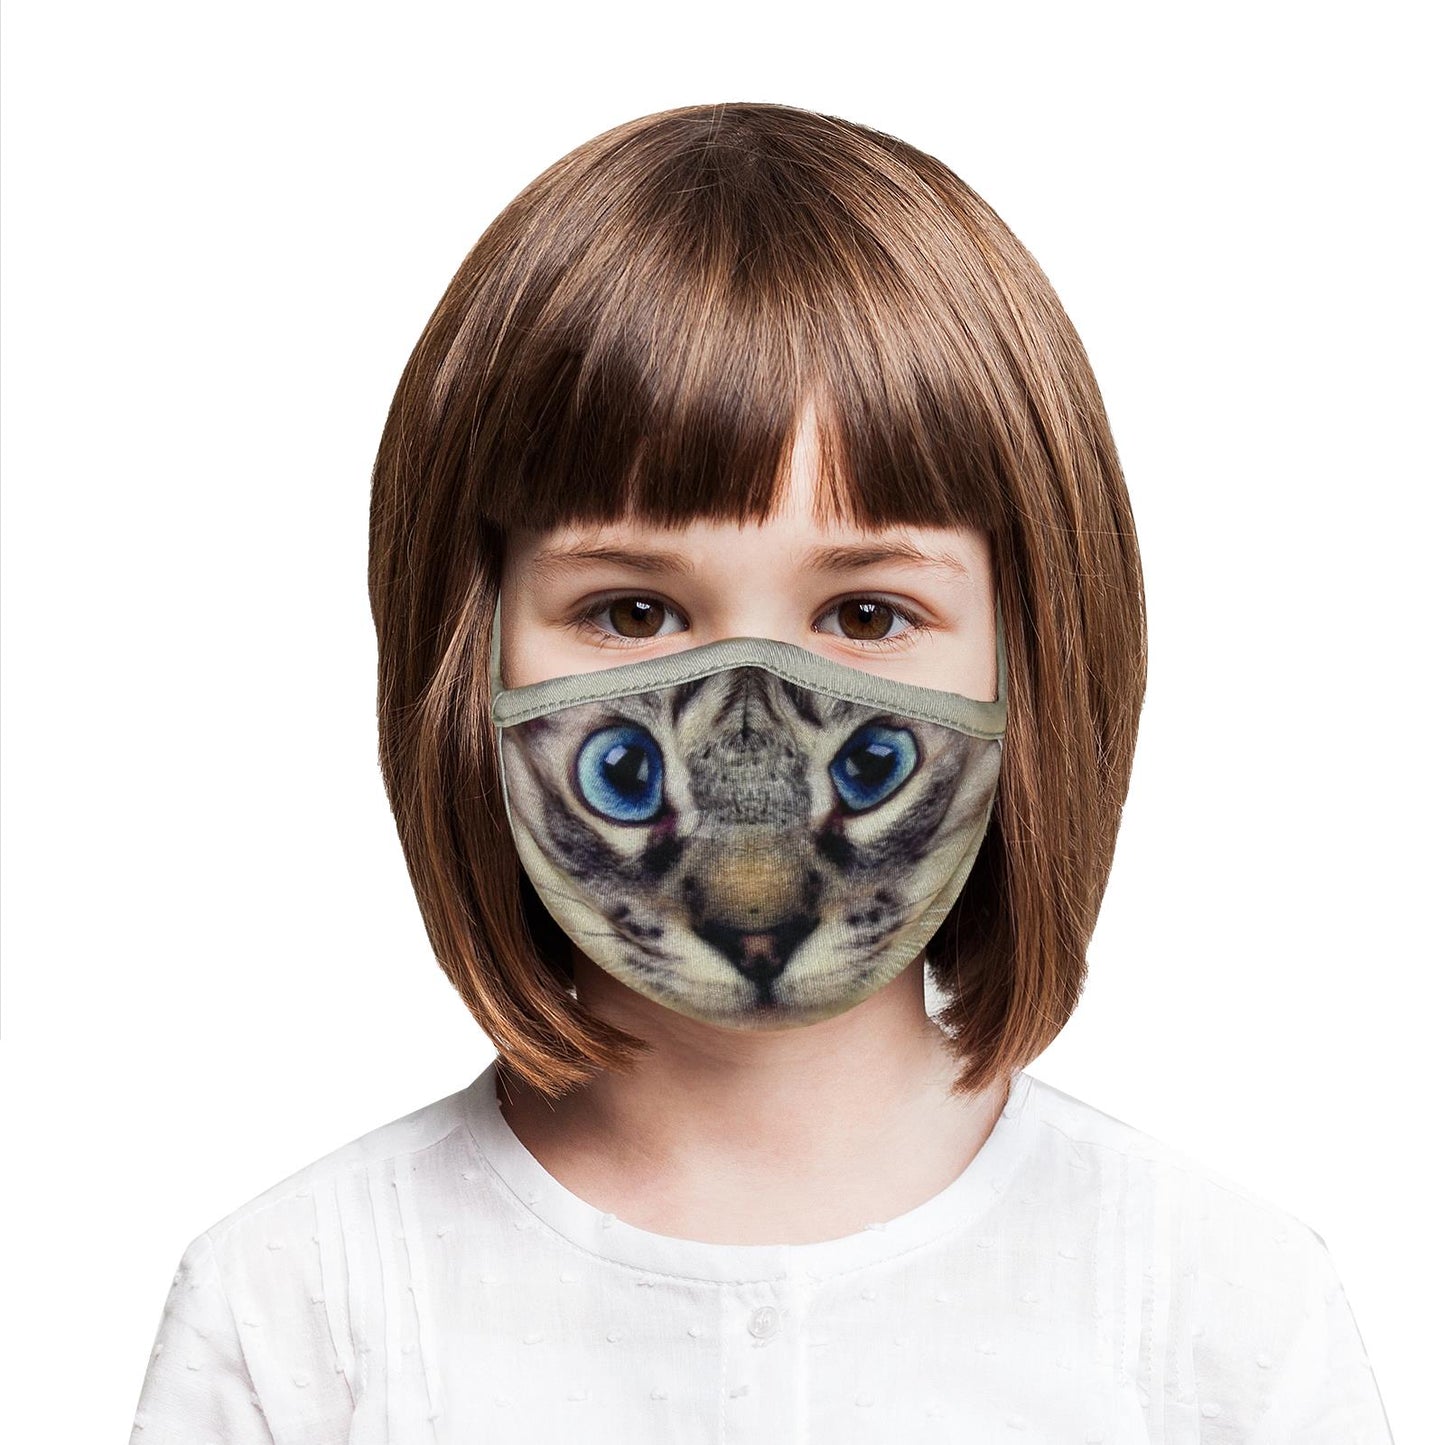 Fashionable Kids Face Masks with Various Designs, Cute Unisex Kids Masks, Colorful Children's Face Masks